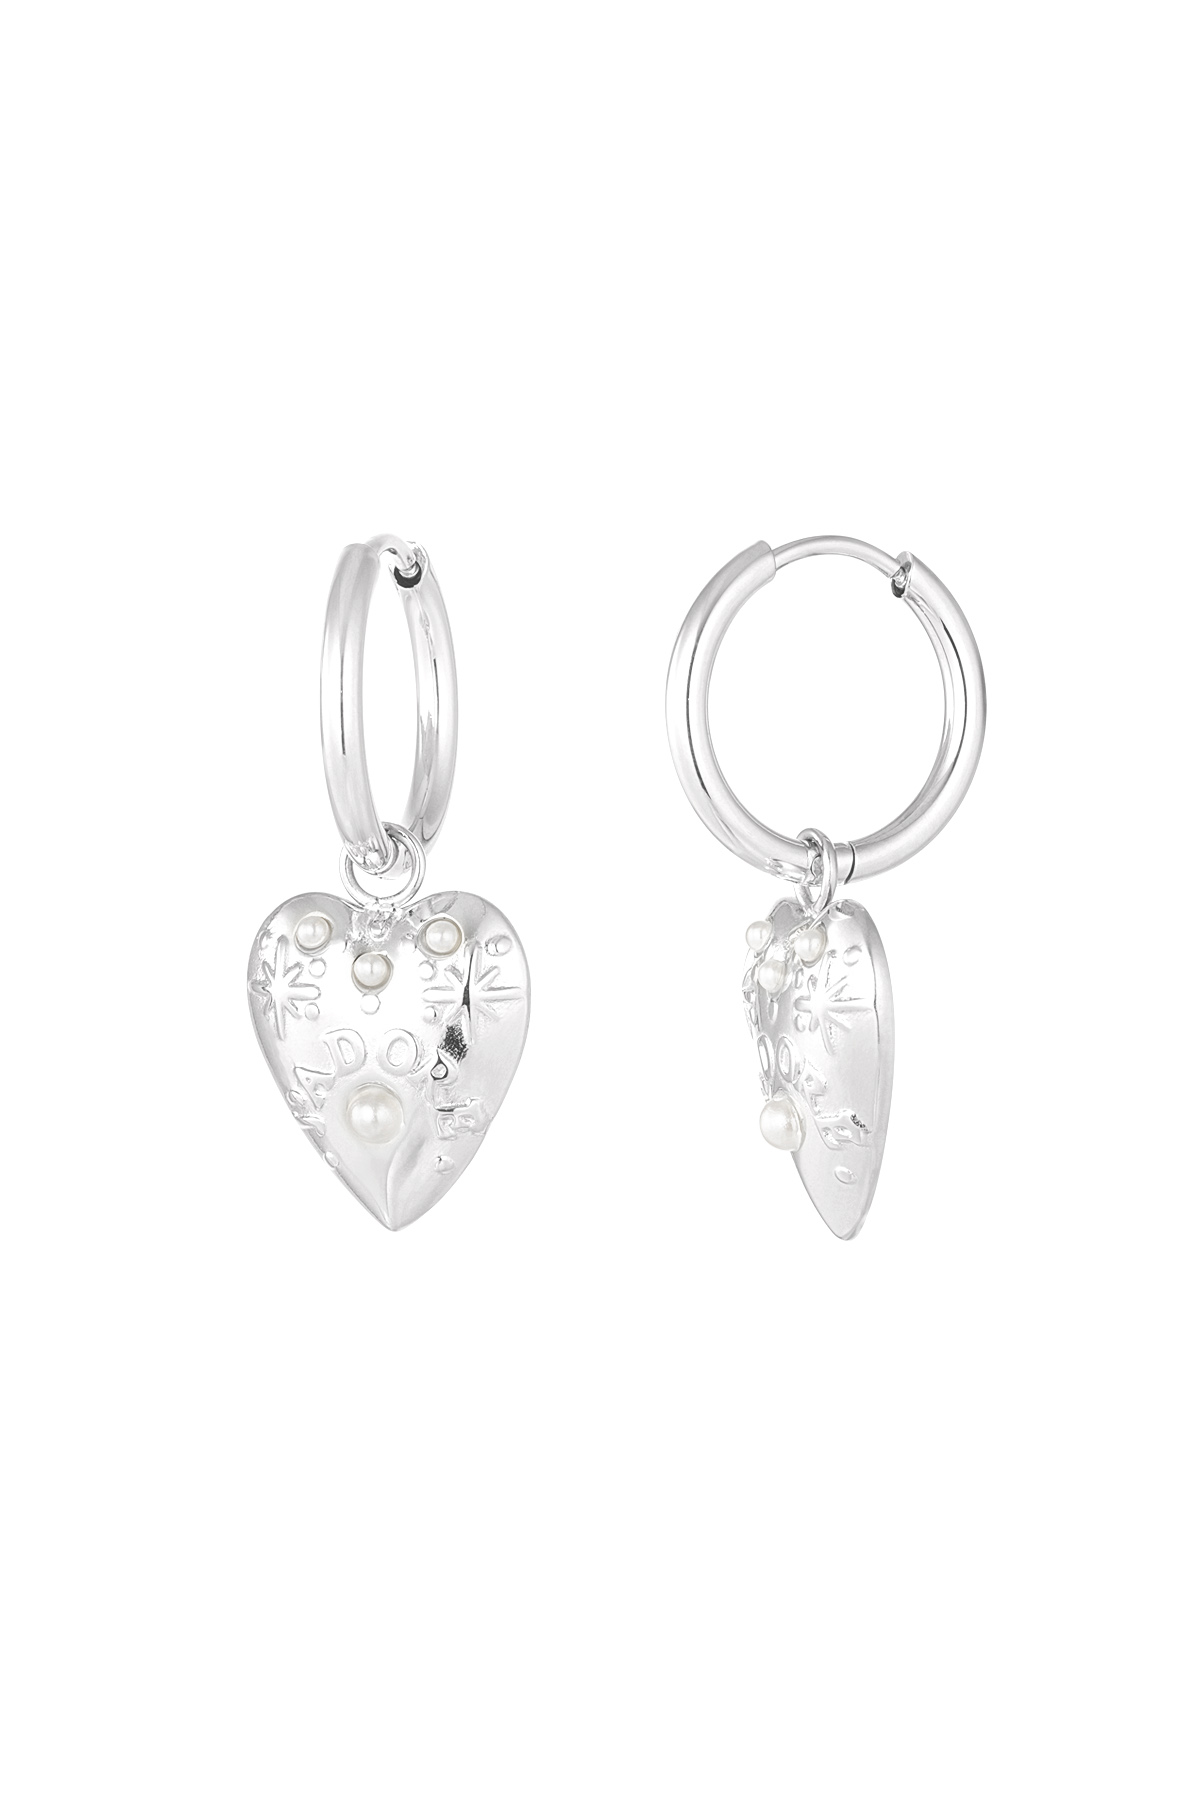 Earrings j'adore pearls - silver h5 